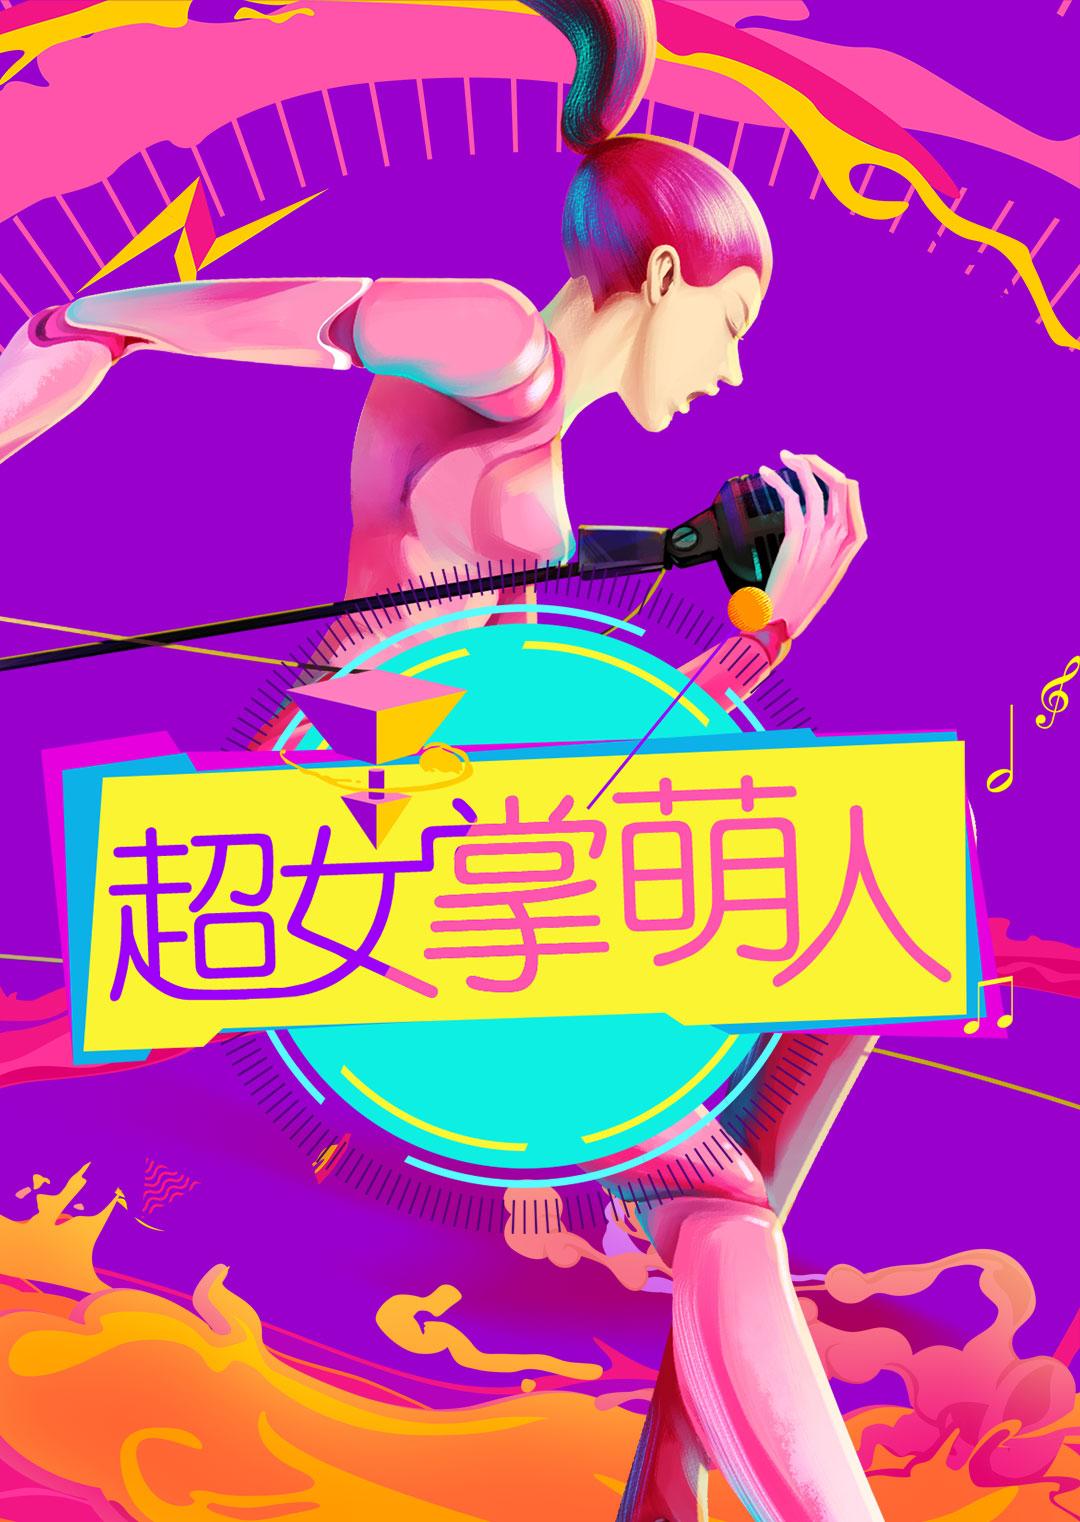 FG欢乐捕鱼app网站电影封面图